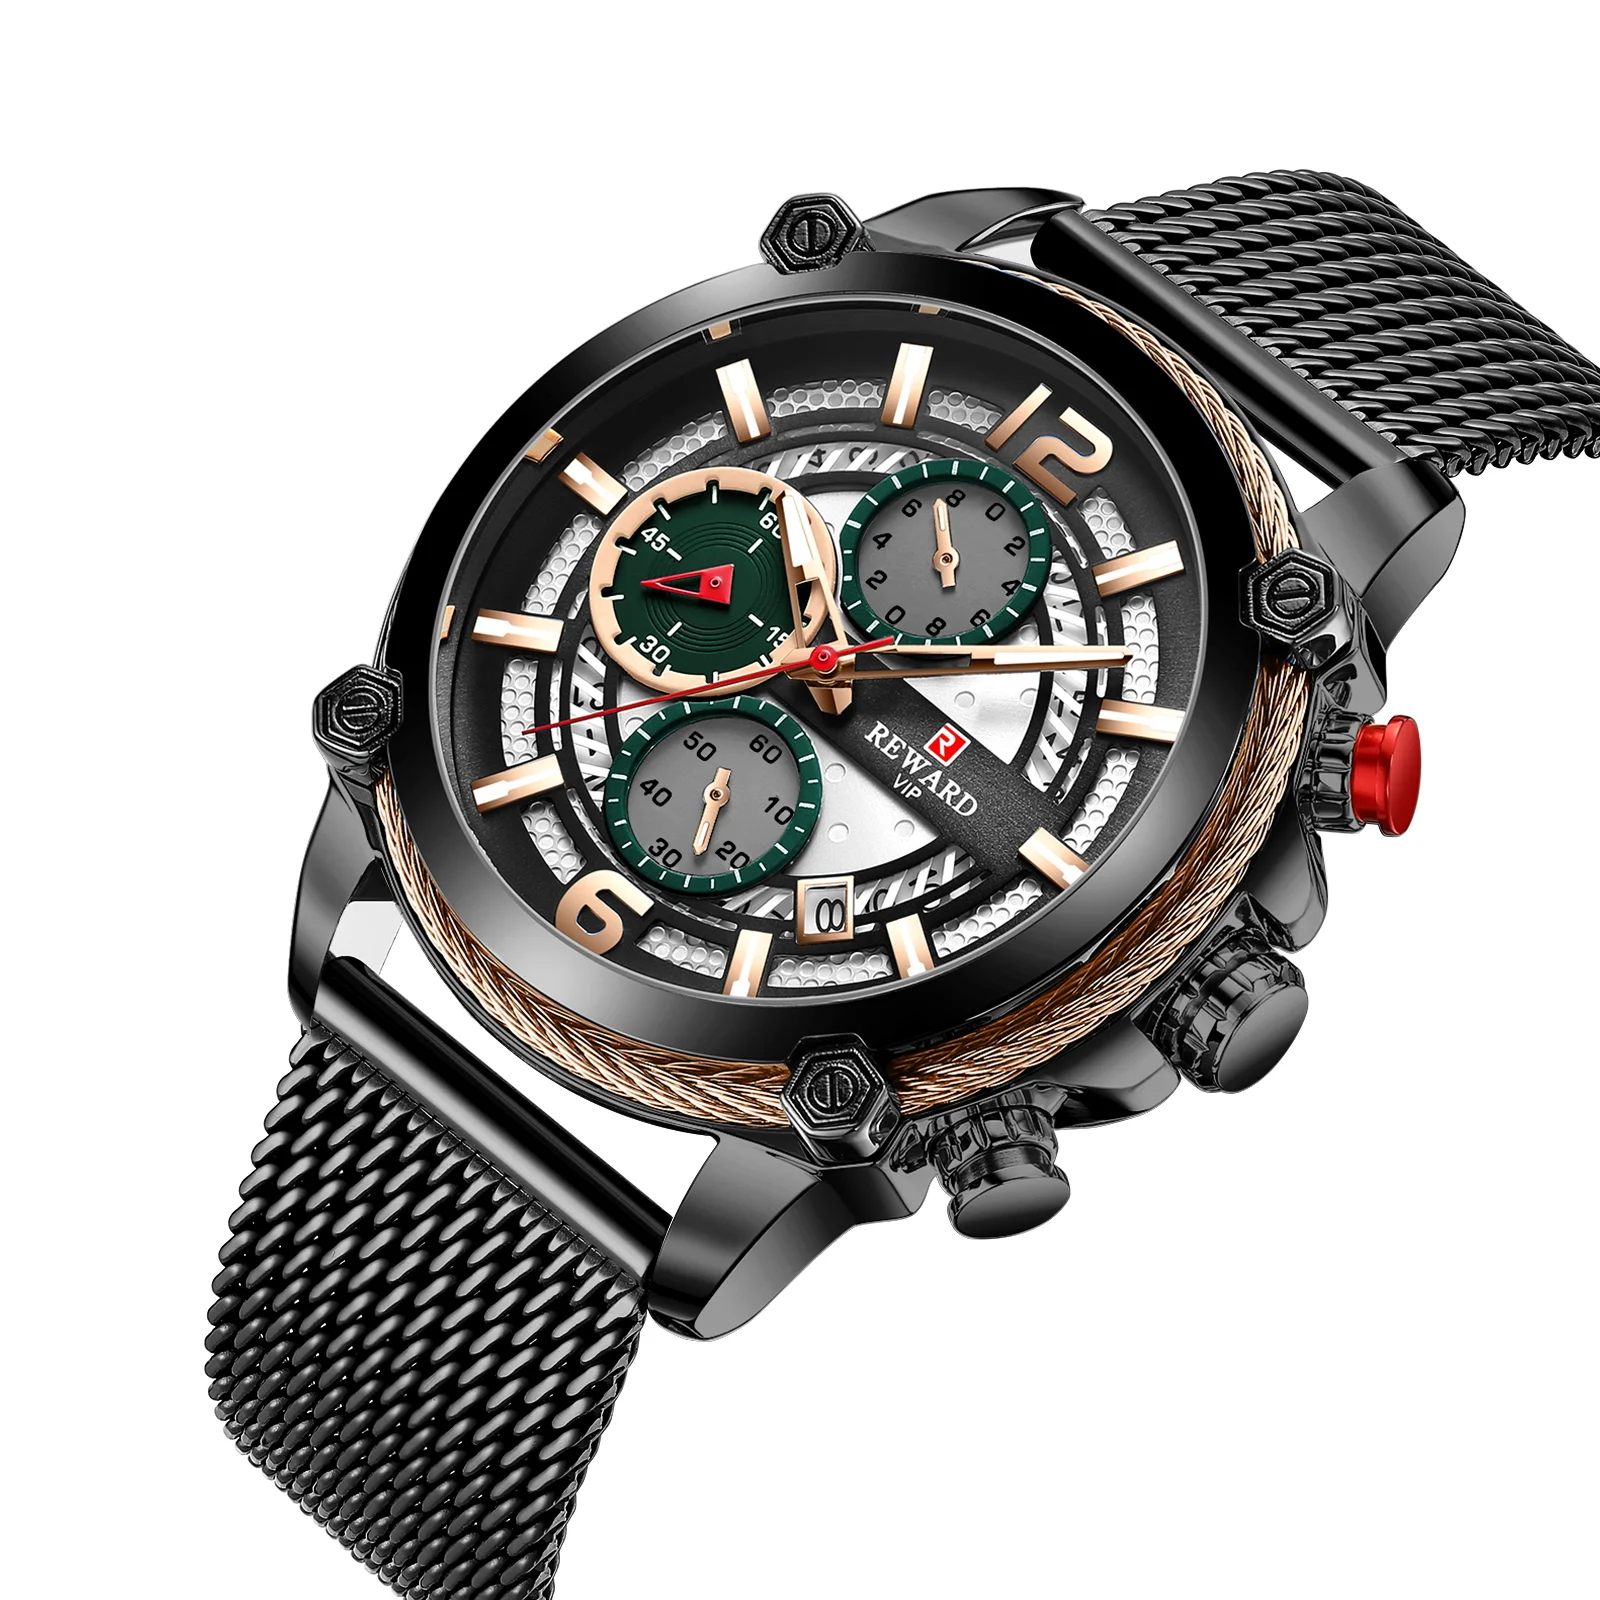 Dropshipping Reward luxury Watches Best Watch Dropshipping Supplier RD82022M